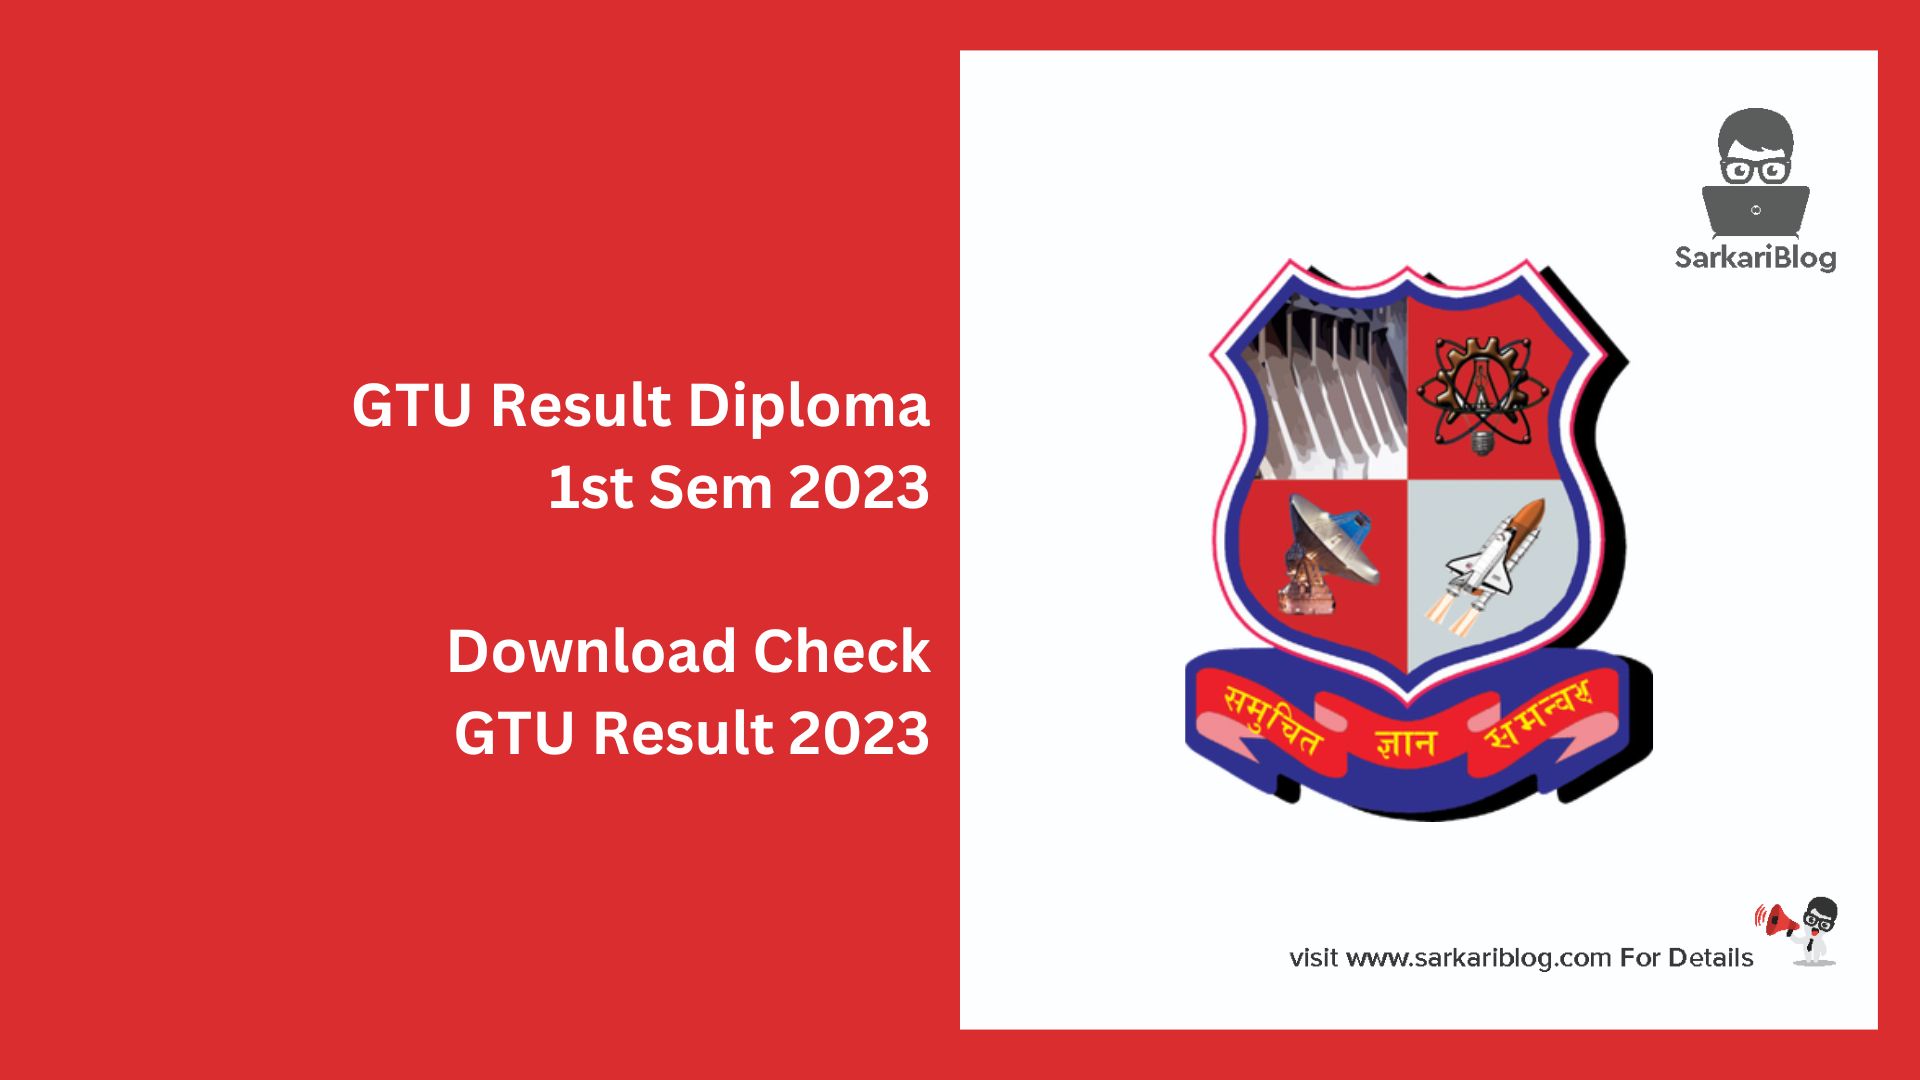 GTU Result Diploma 1st Sem 2023